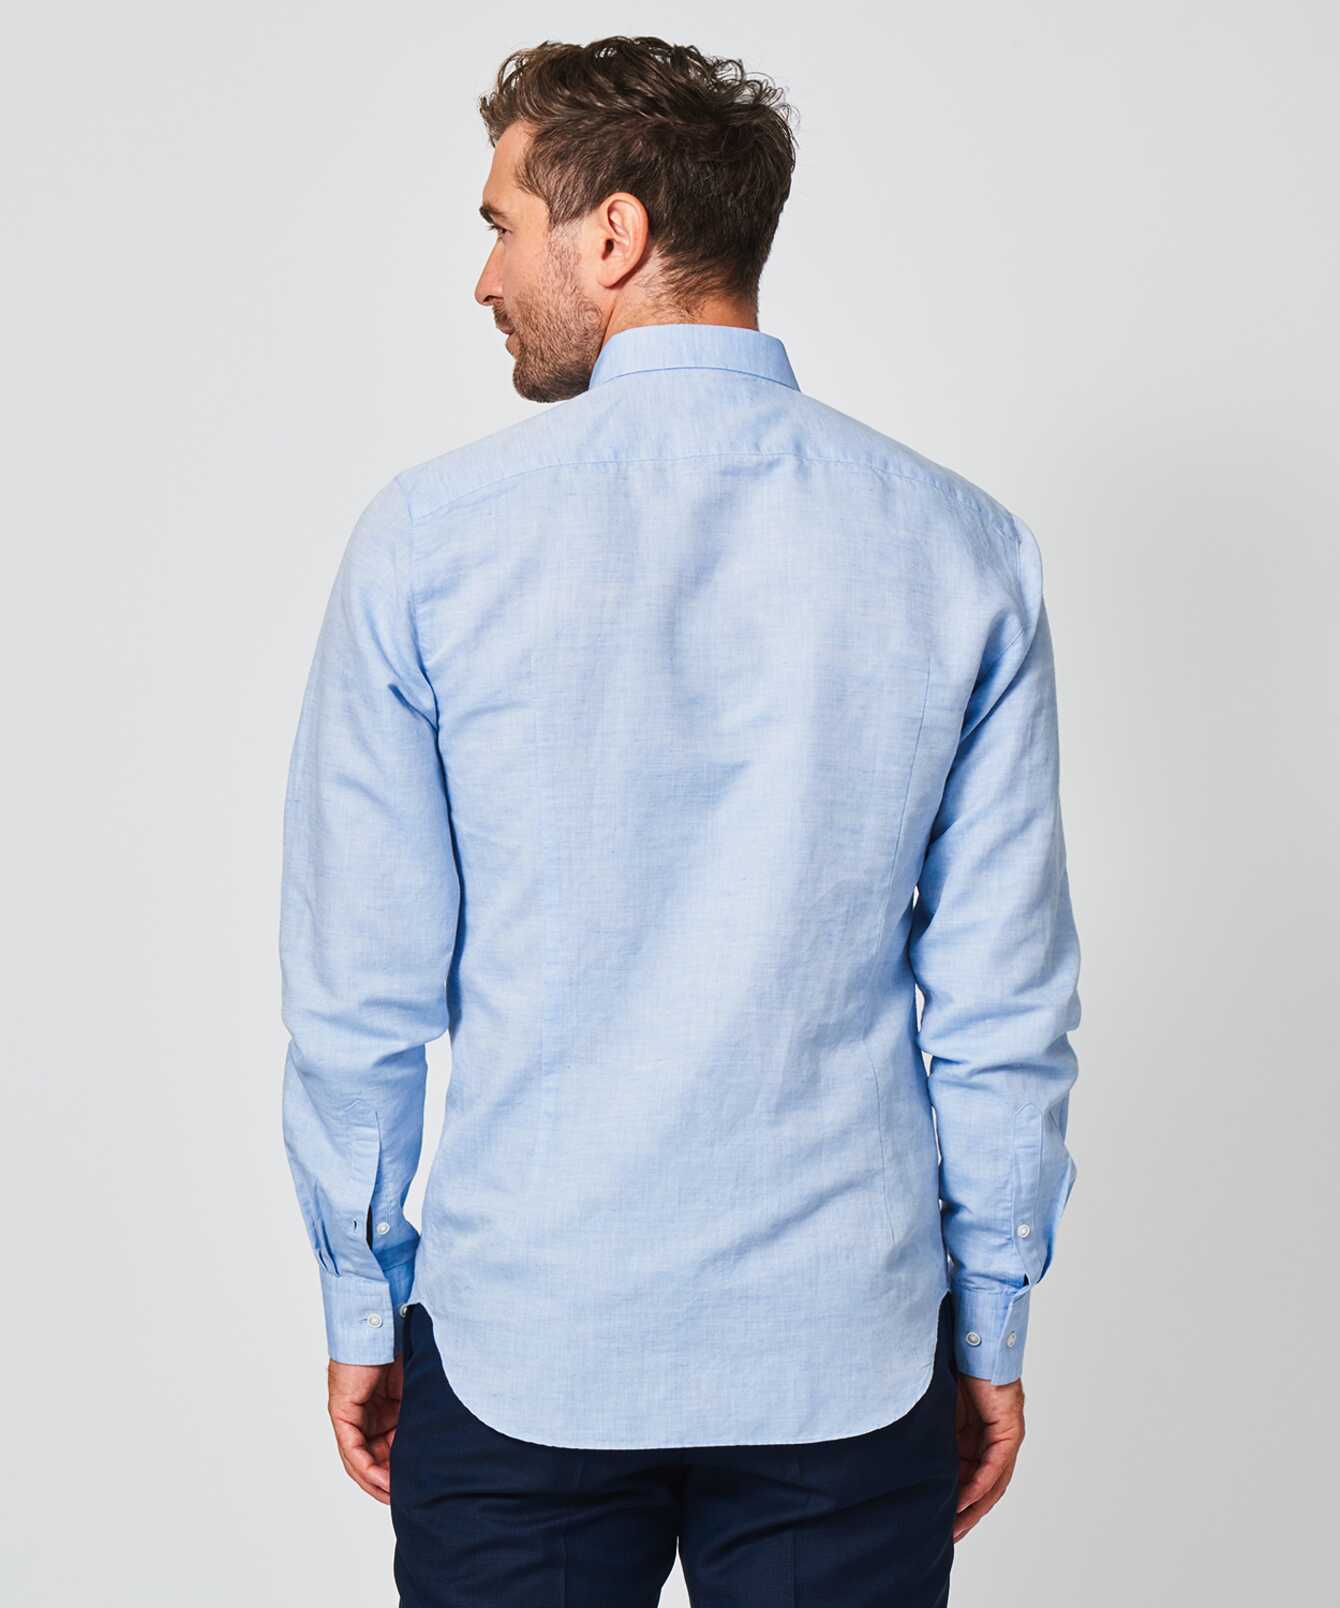 Shirt Portofino Light Blue Linen Shirt Extra Long Sleeve The Shirt Factory